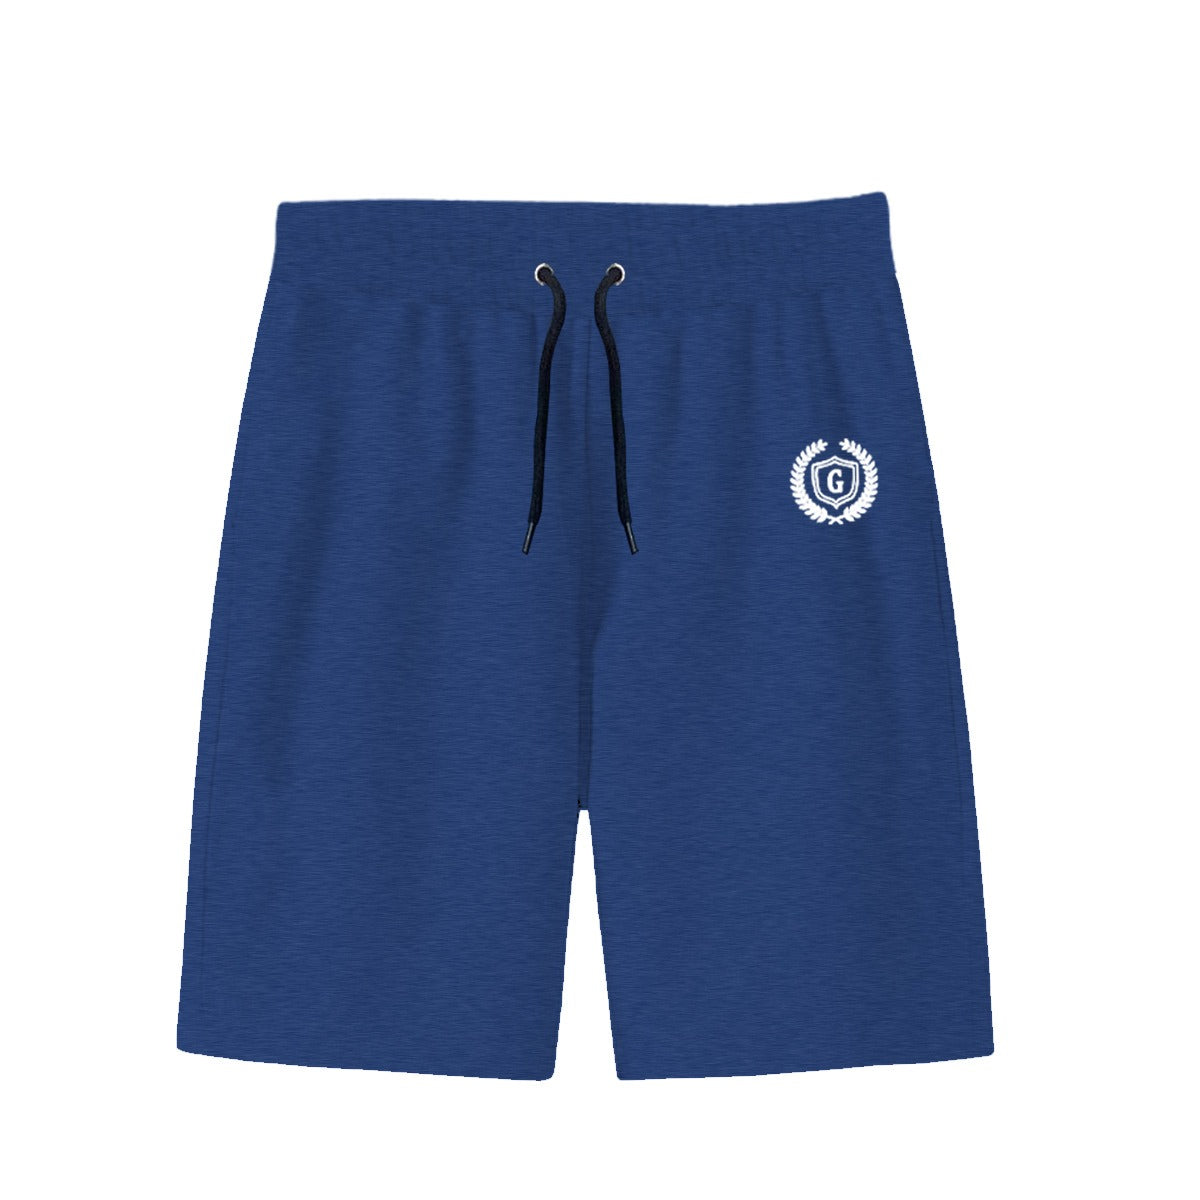 HG Signature Emb Three Quarter Summer Shorts - Amazing Blue